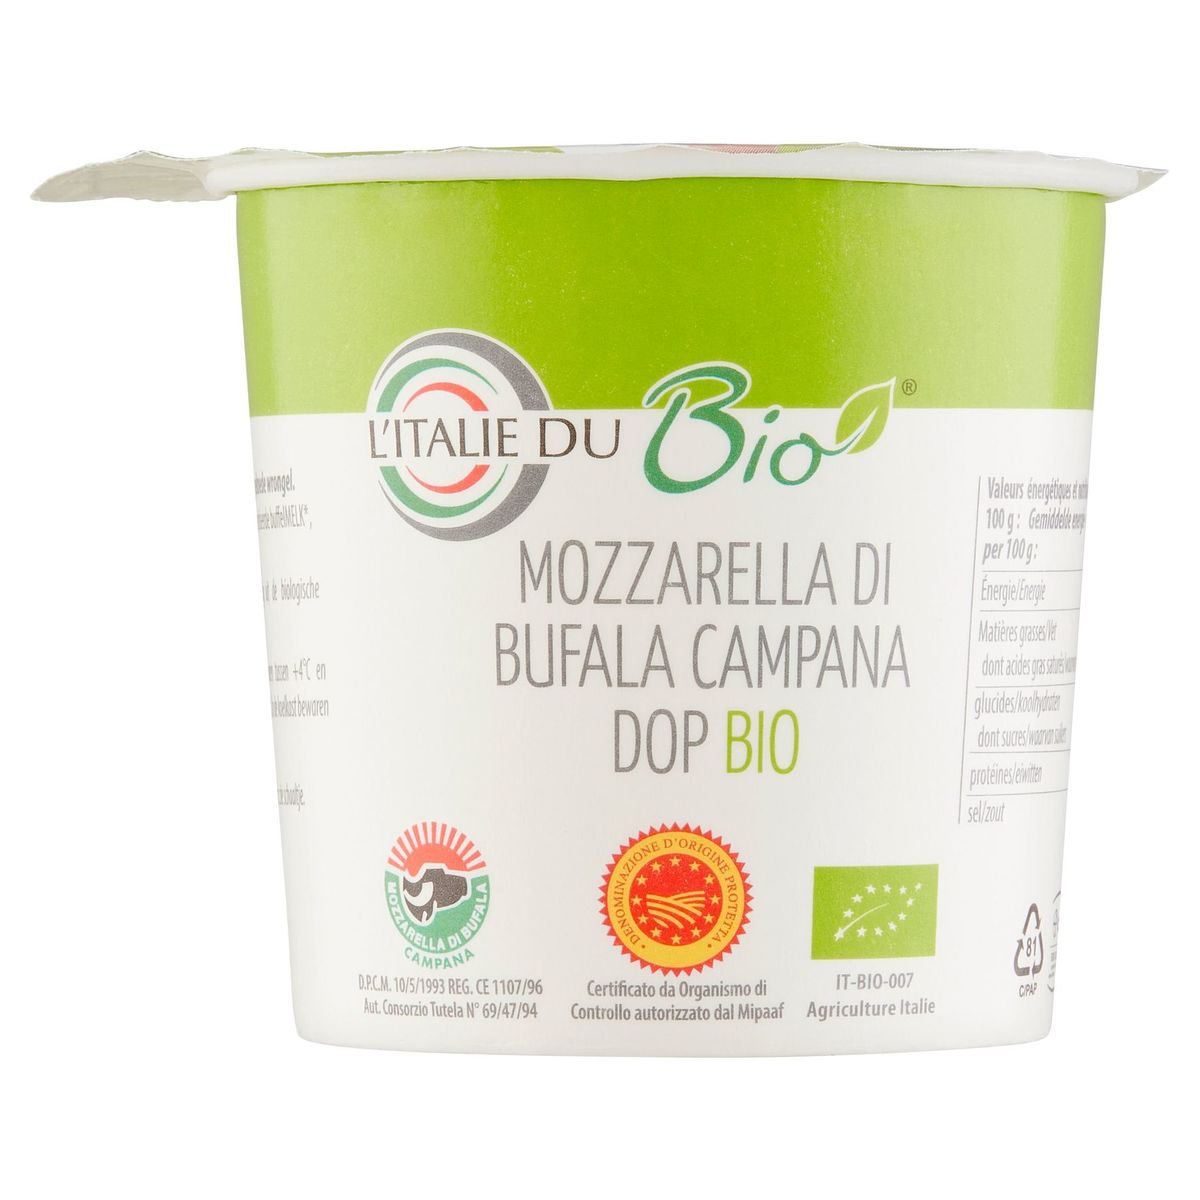 L'Italie du Bio Mozzarella di Bufala Campana Dop Bio 250 g